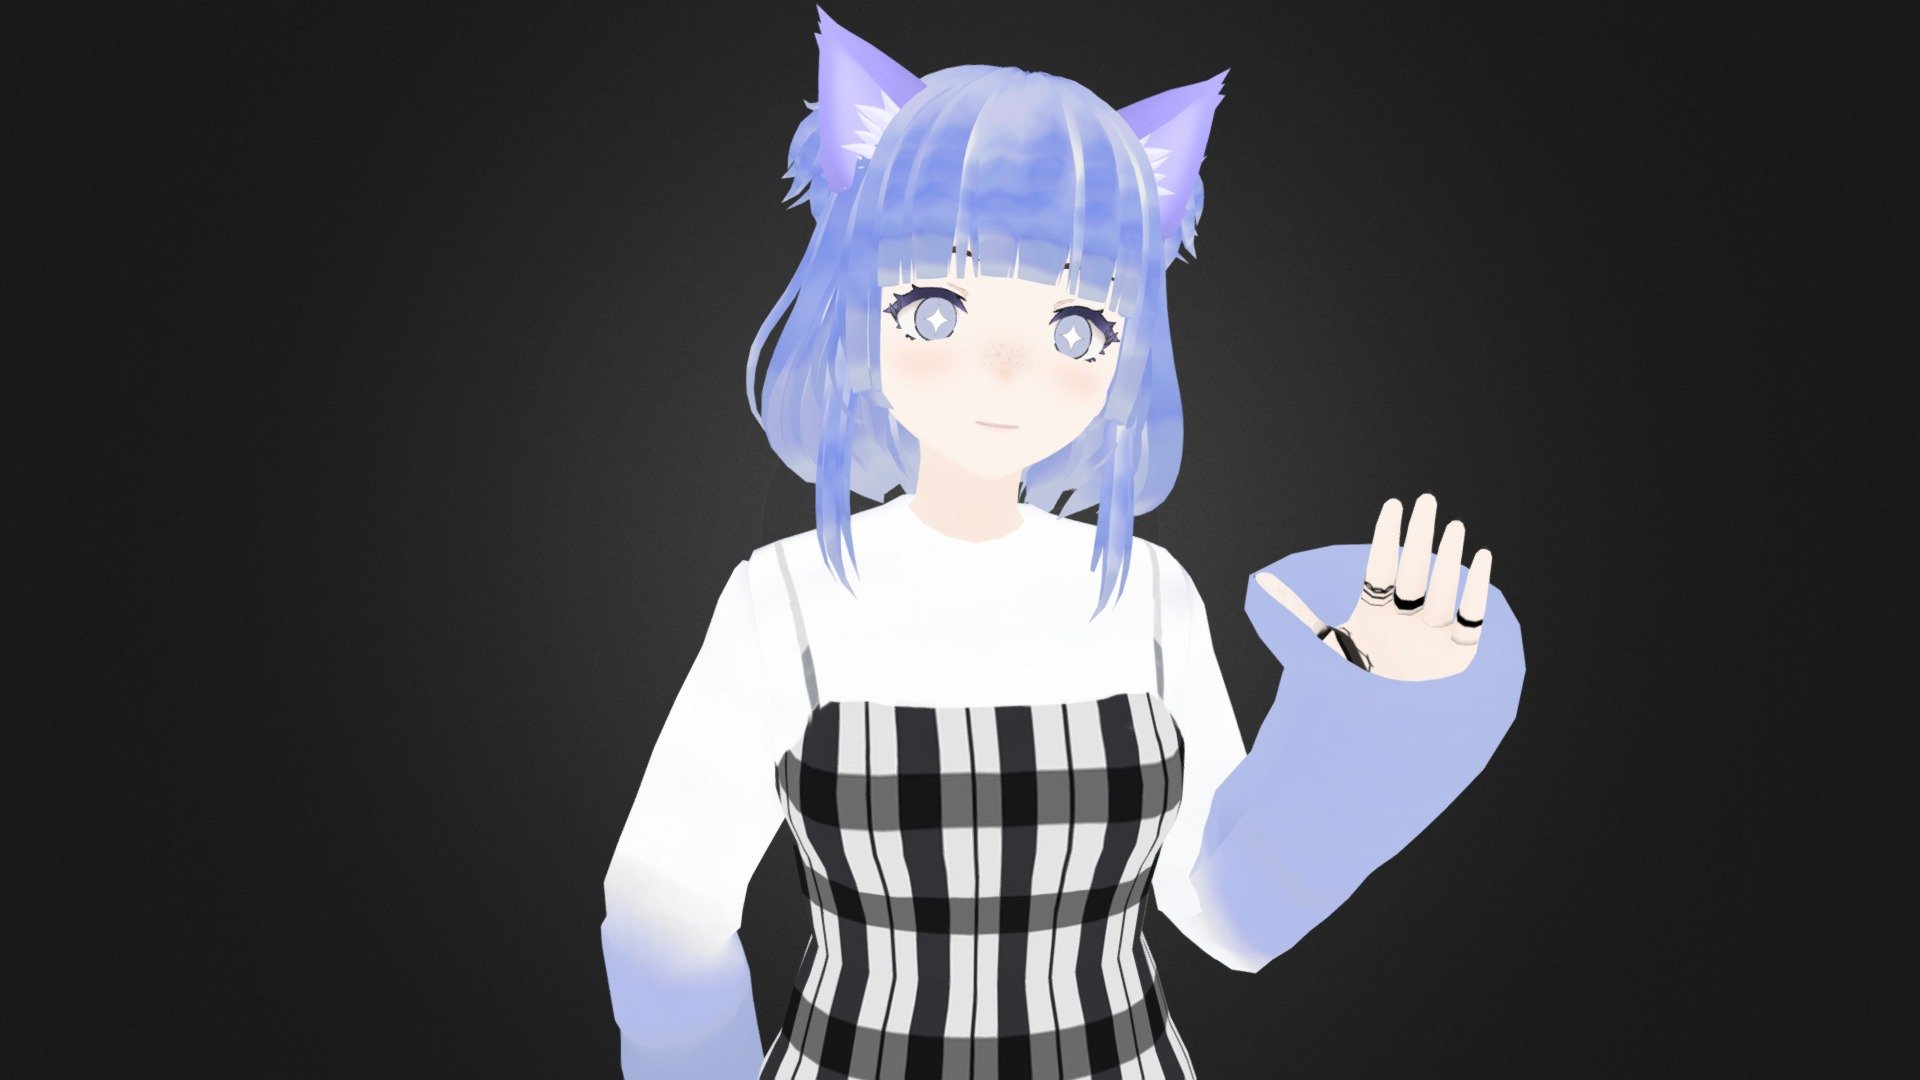 Cute Anime Girl Character - Akina 3D Model by CGAnime